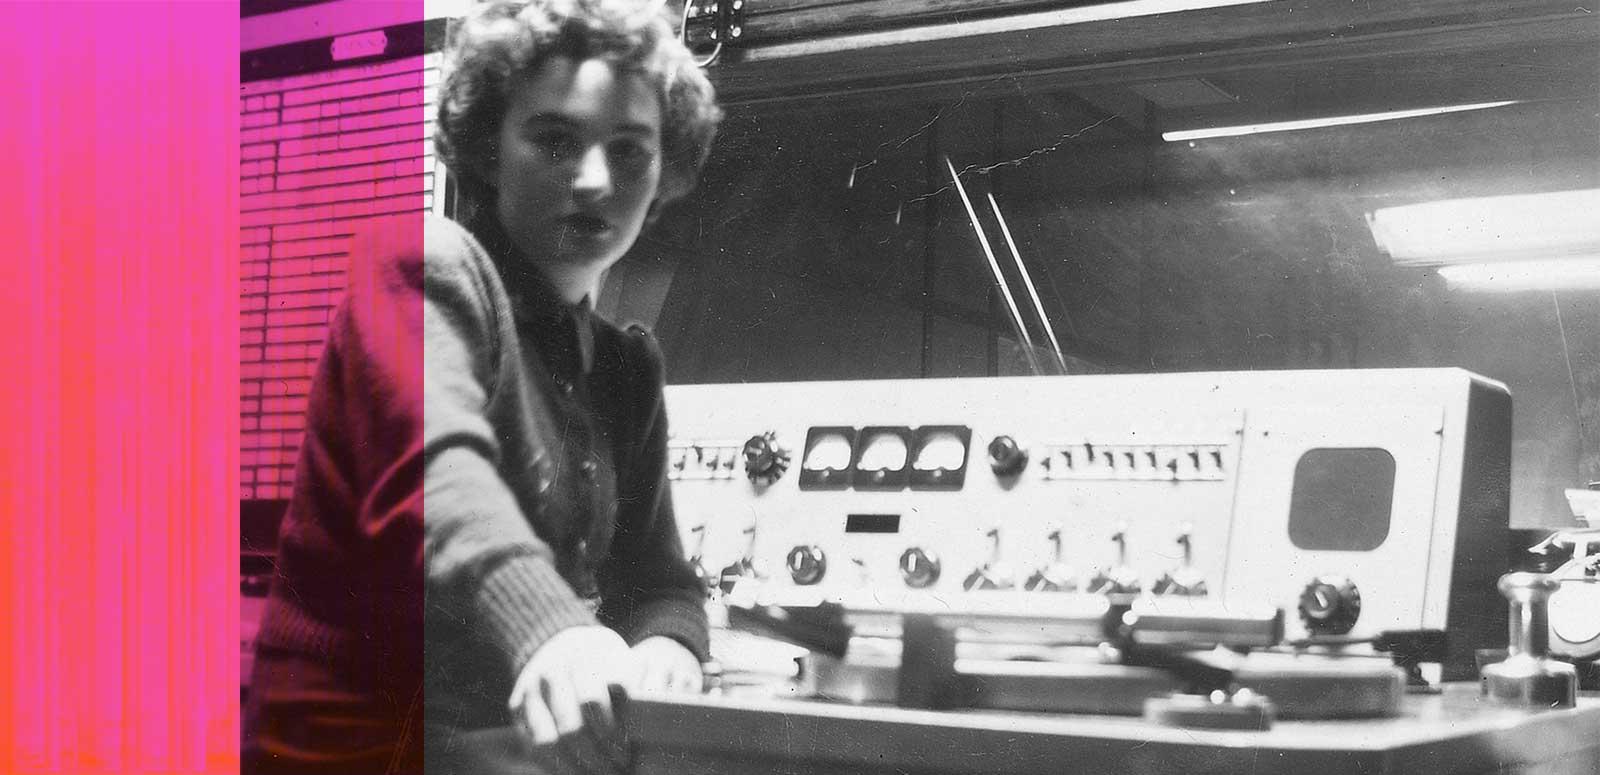 Radio personality Nina Valentine at a mixing desk in a radio studio